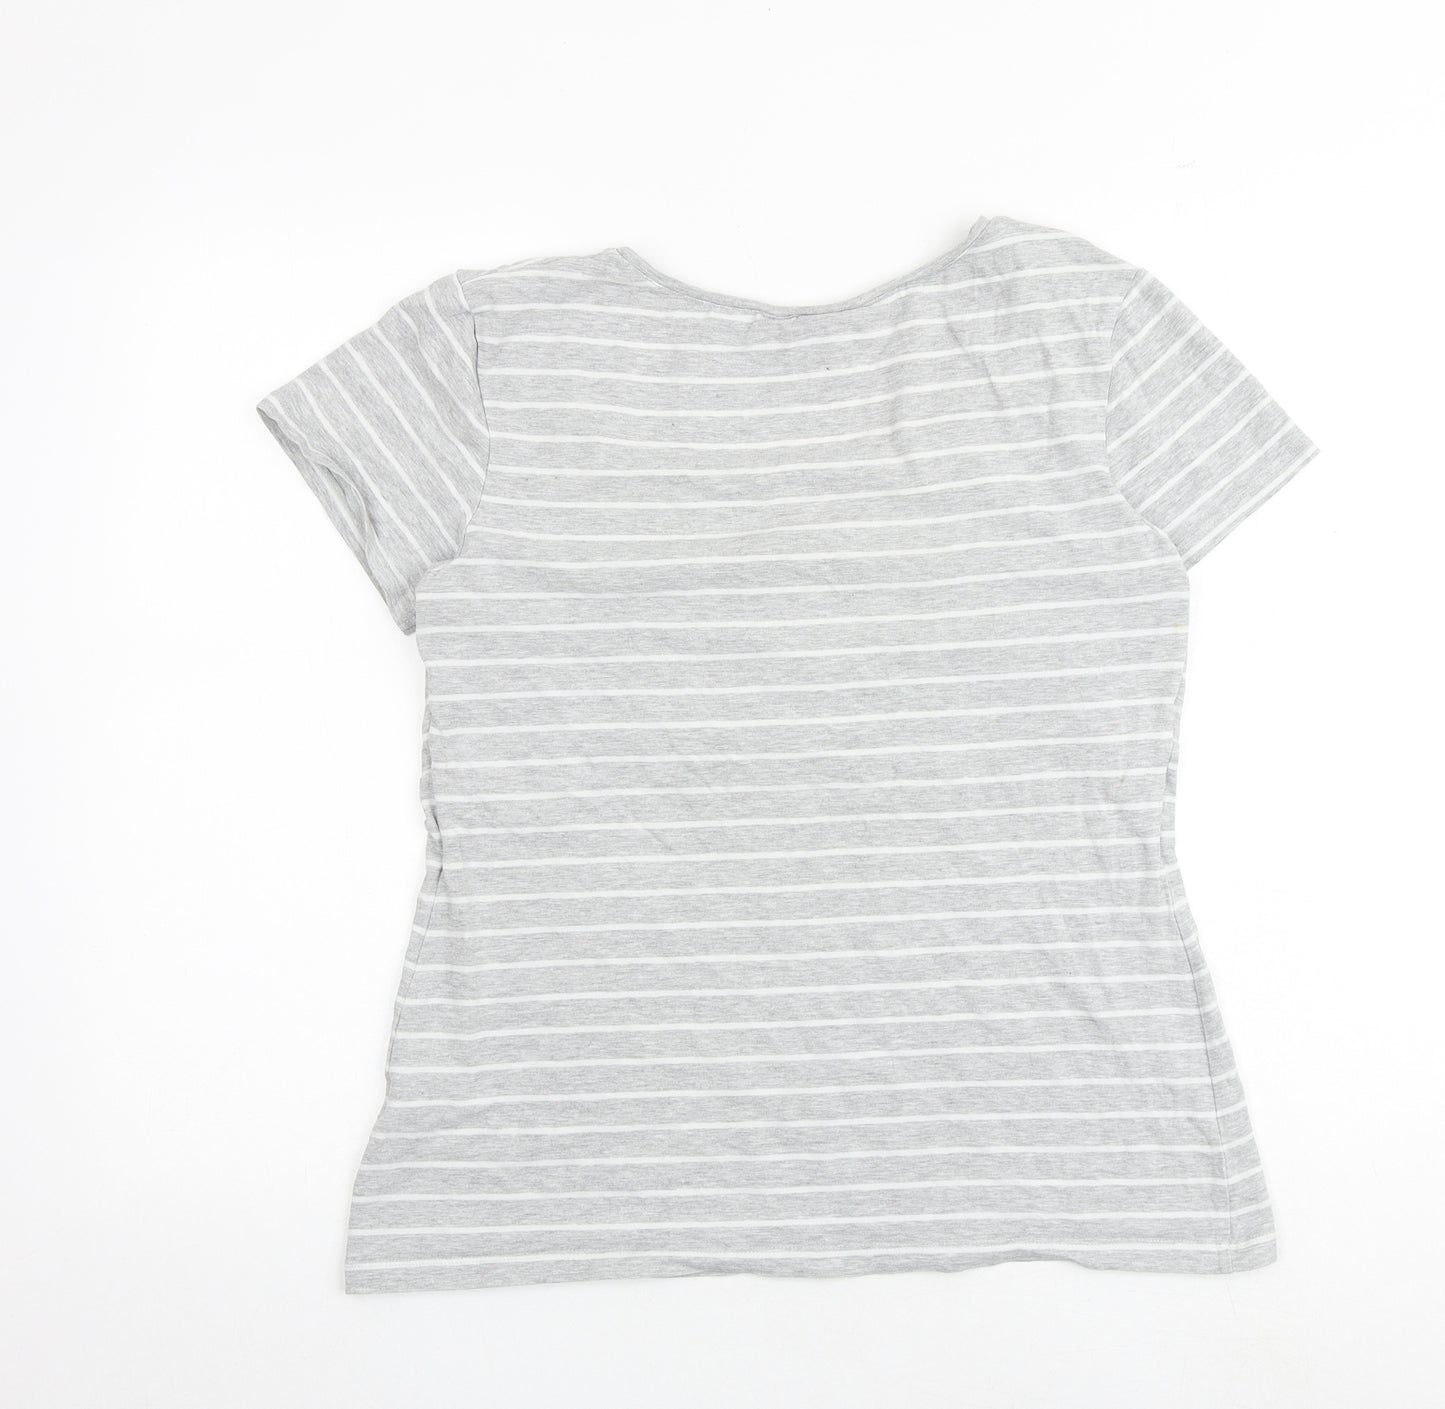 H&M Womens Grey Striped Cotton Basic T-Shirt Size L V-Neck